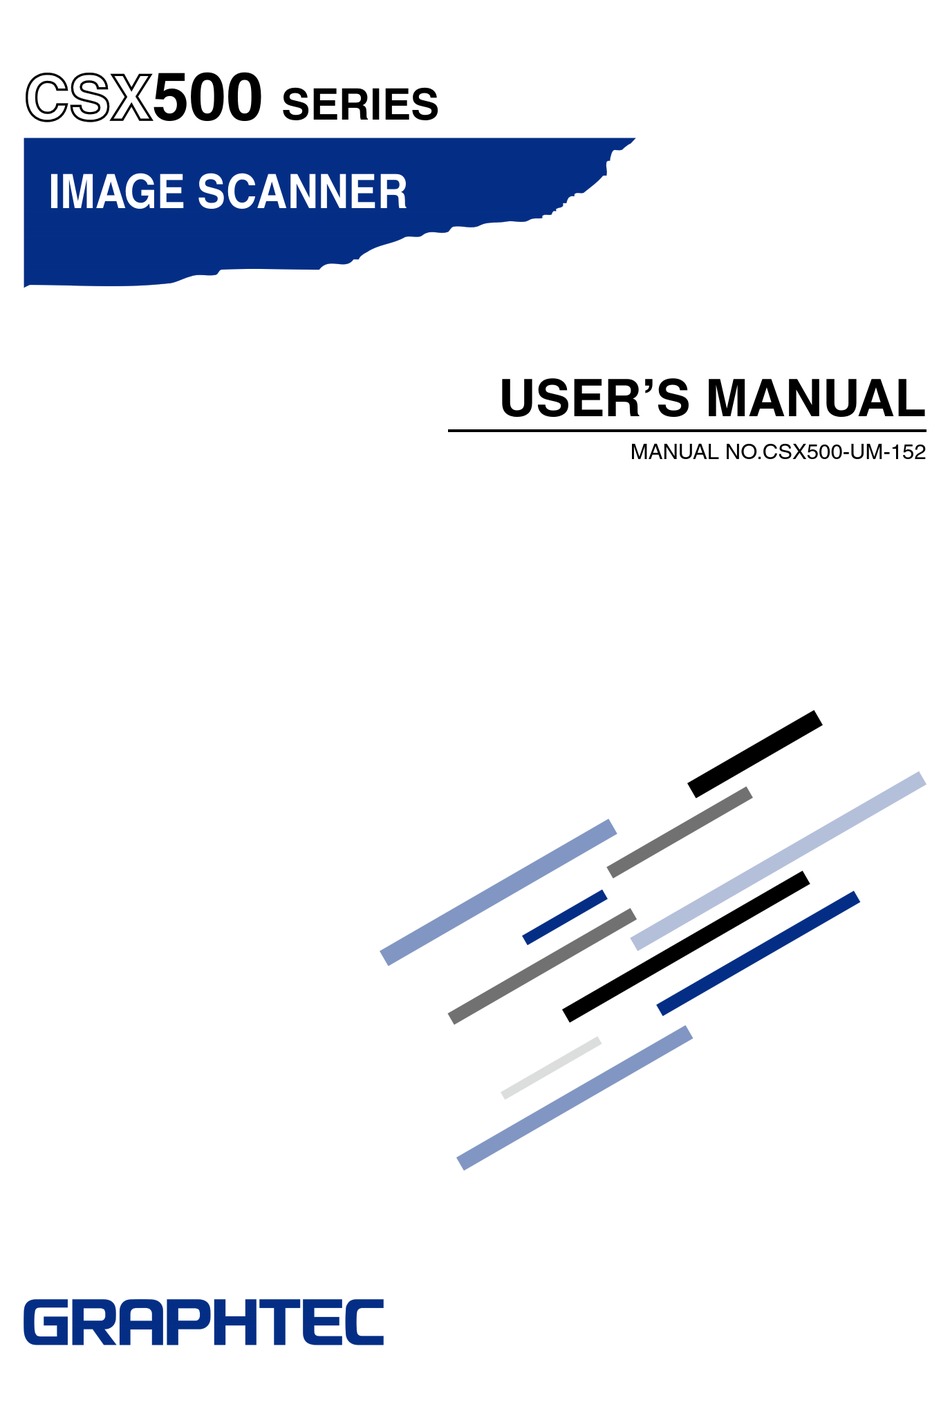 Graphtec Csx500 Series User Manual Pdf Download Manualslib 7878